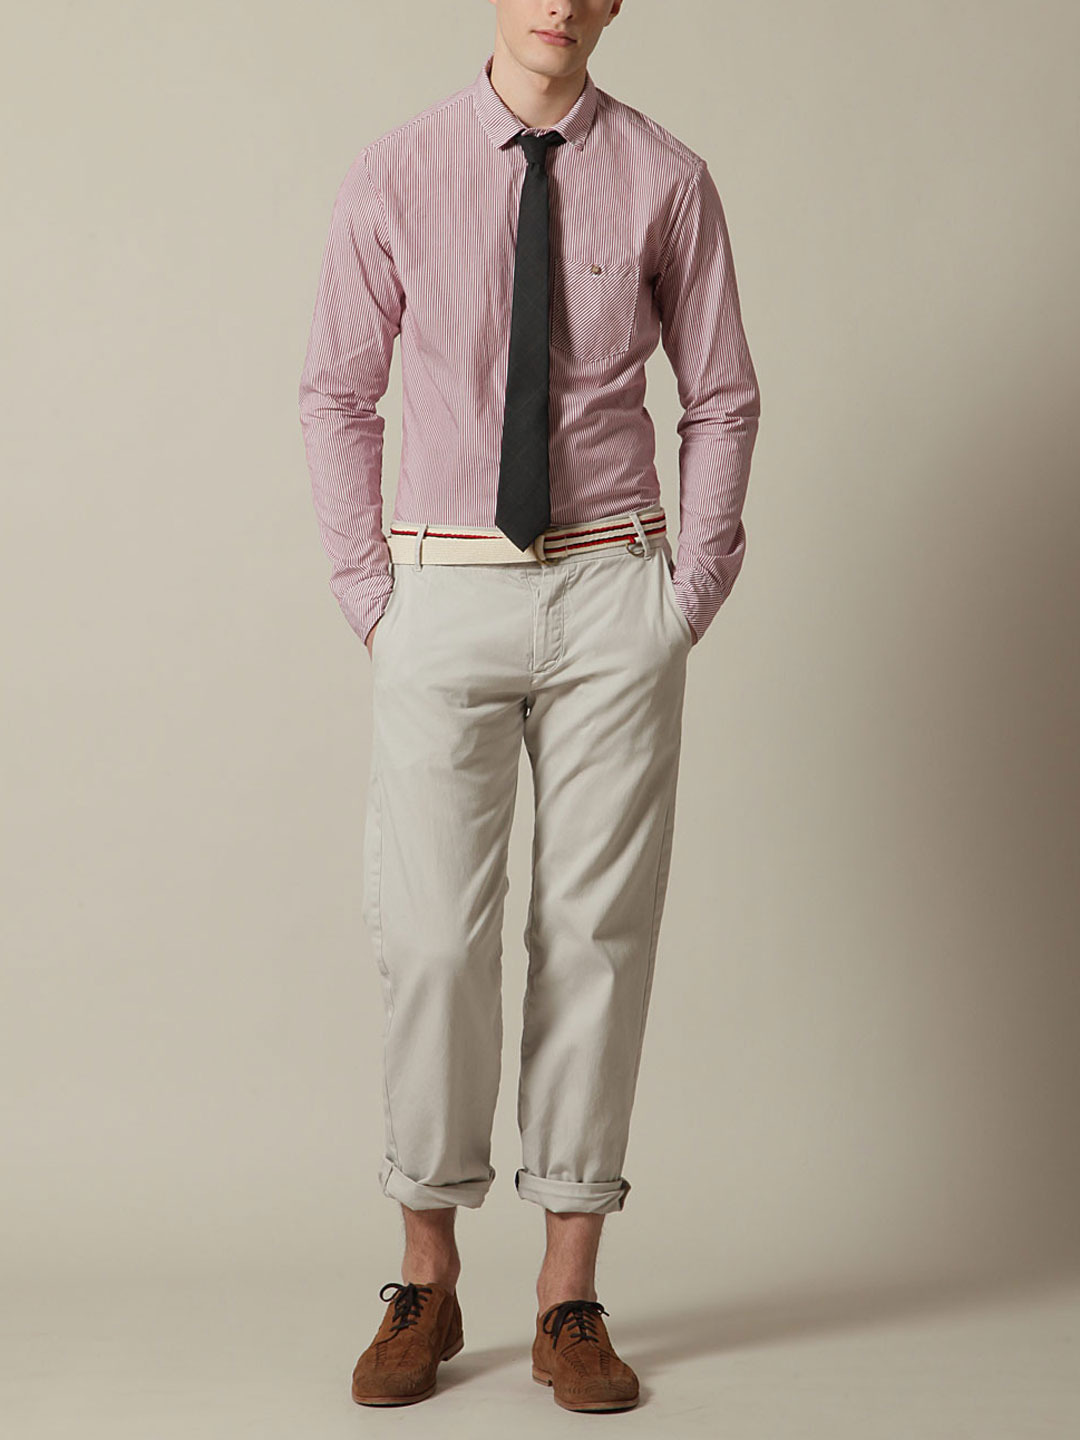 What to wear: Pink shirt, khakis, black tie, brown shoes, grosgrain belt